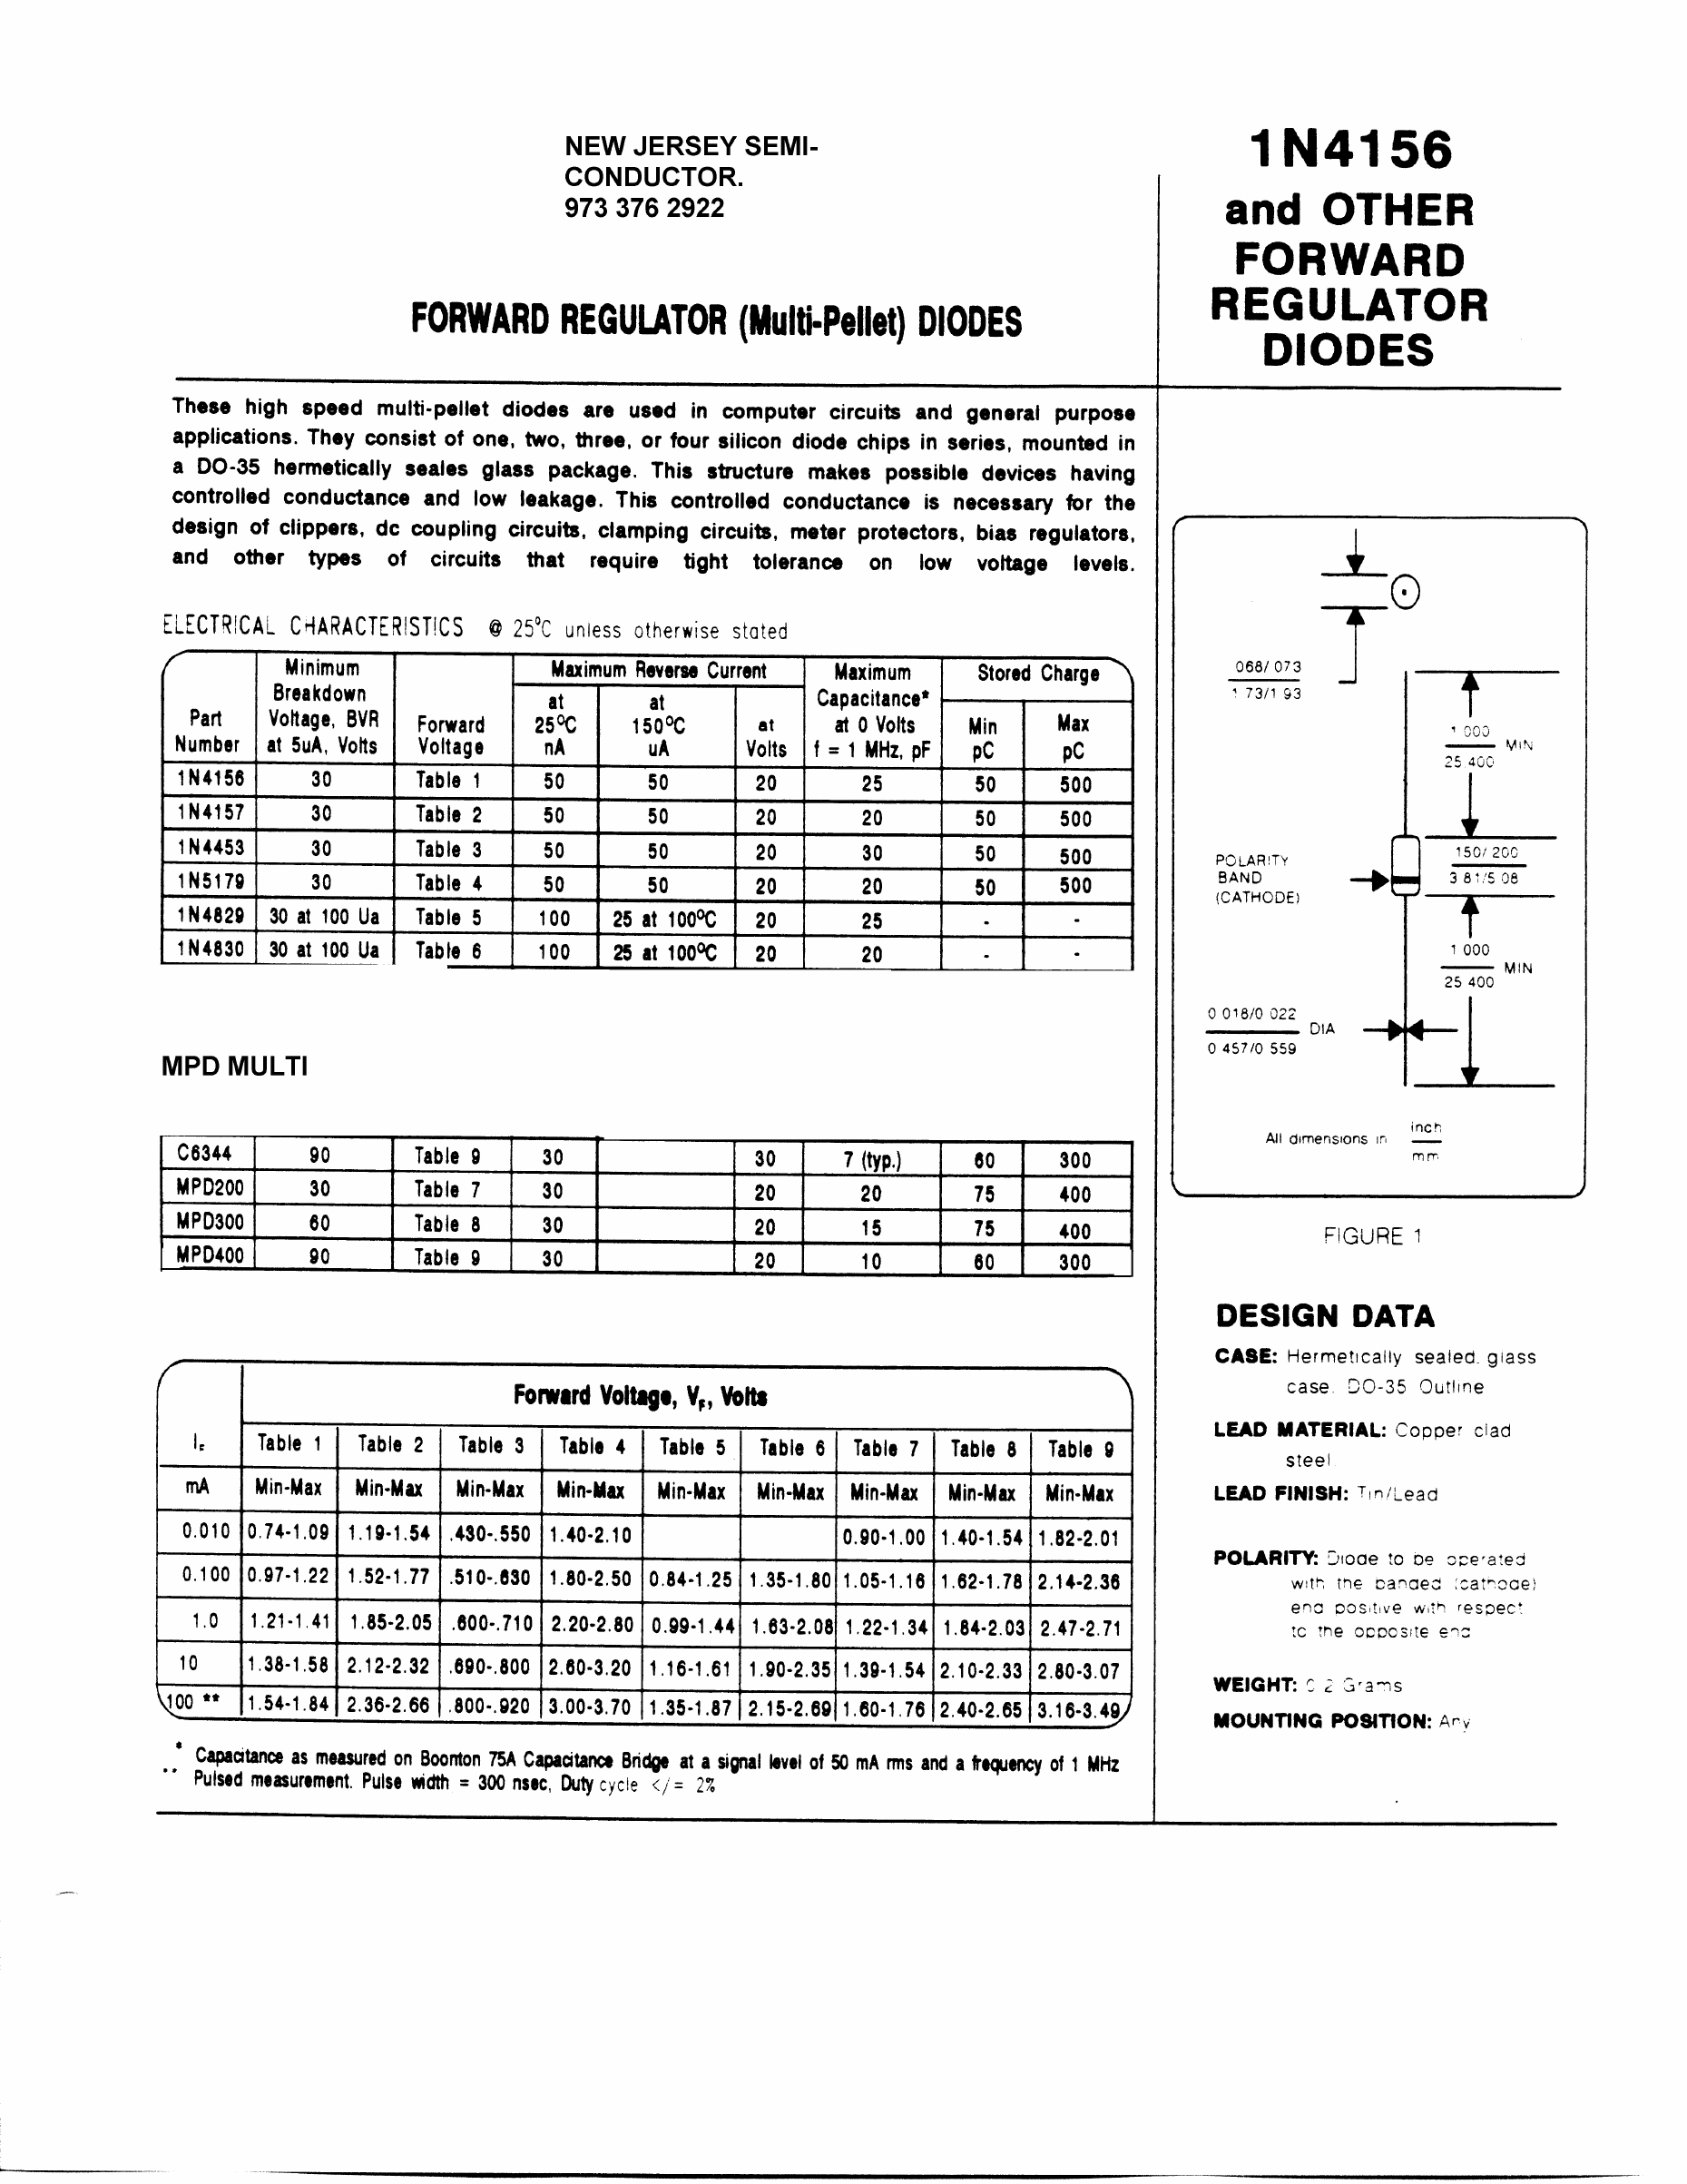 MPD400 Datasheet PDF New Jersey Semiconductor